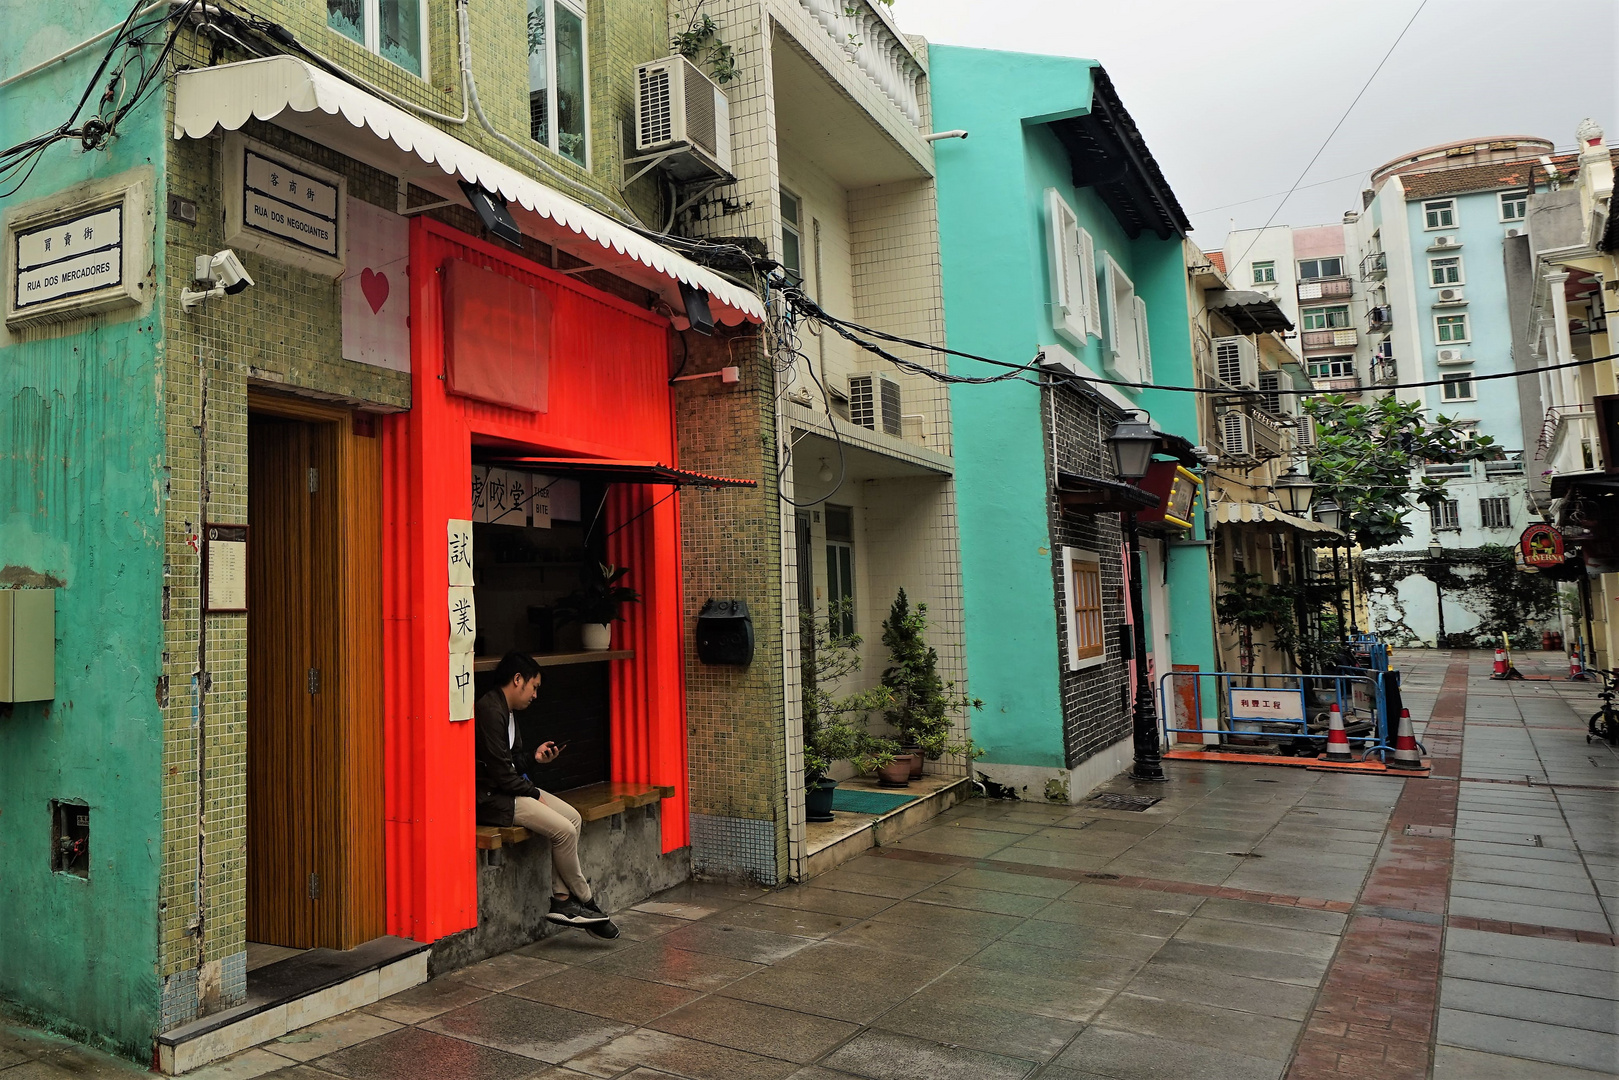 Streets of Macau 7